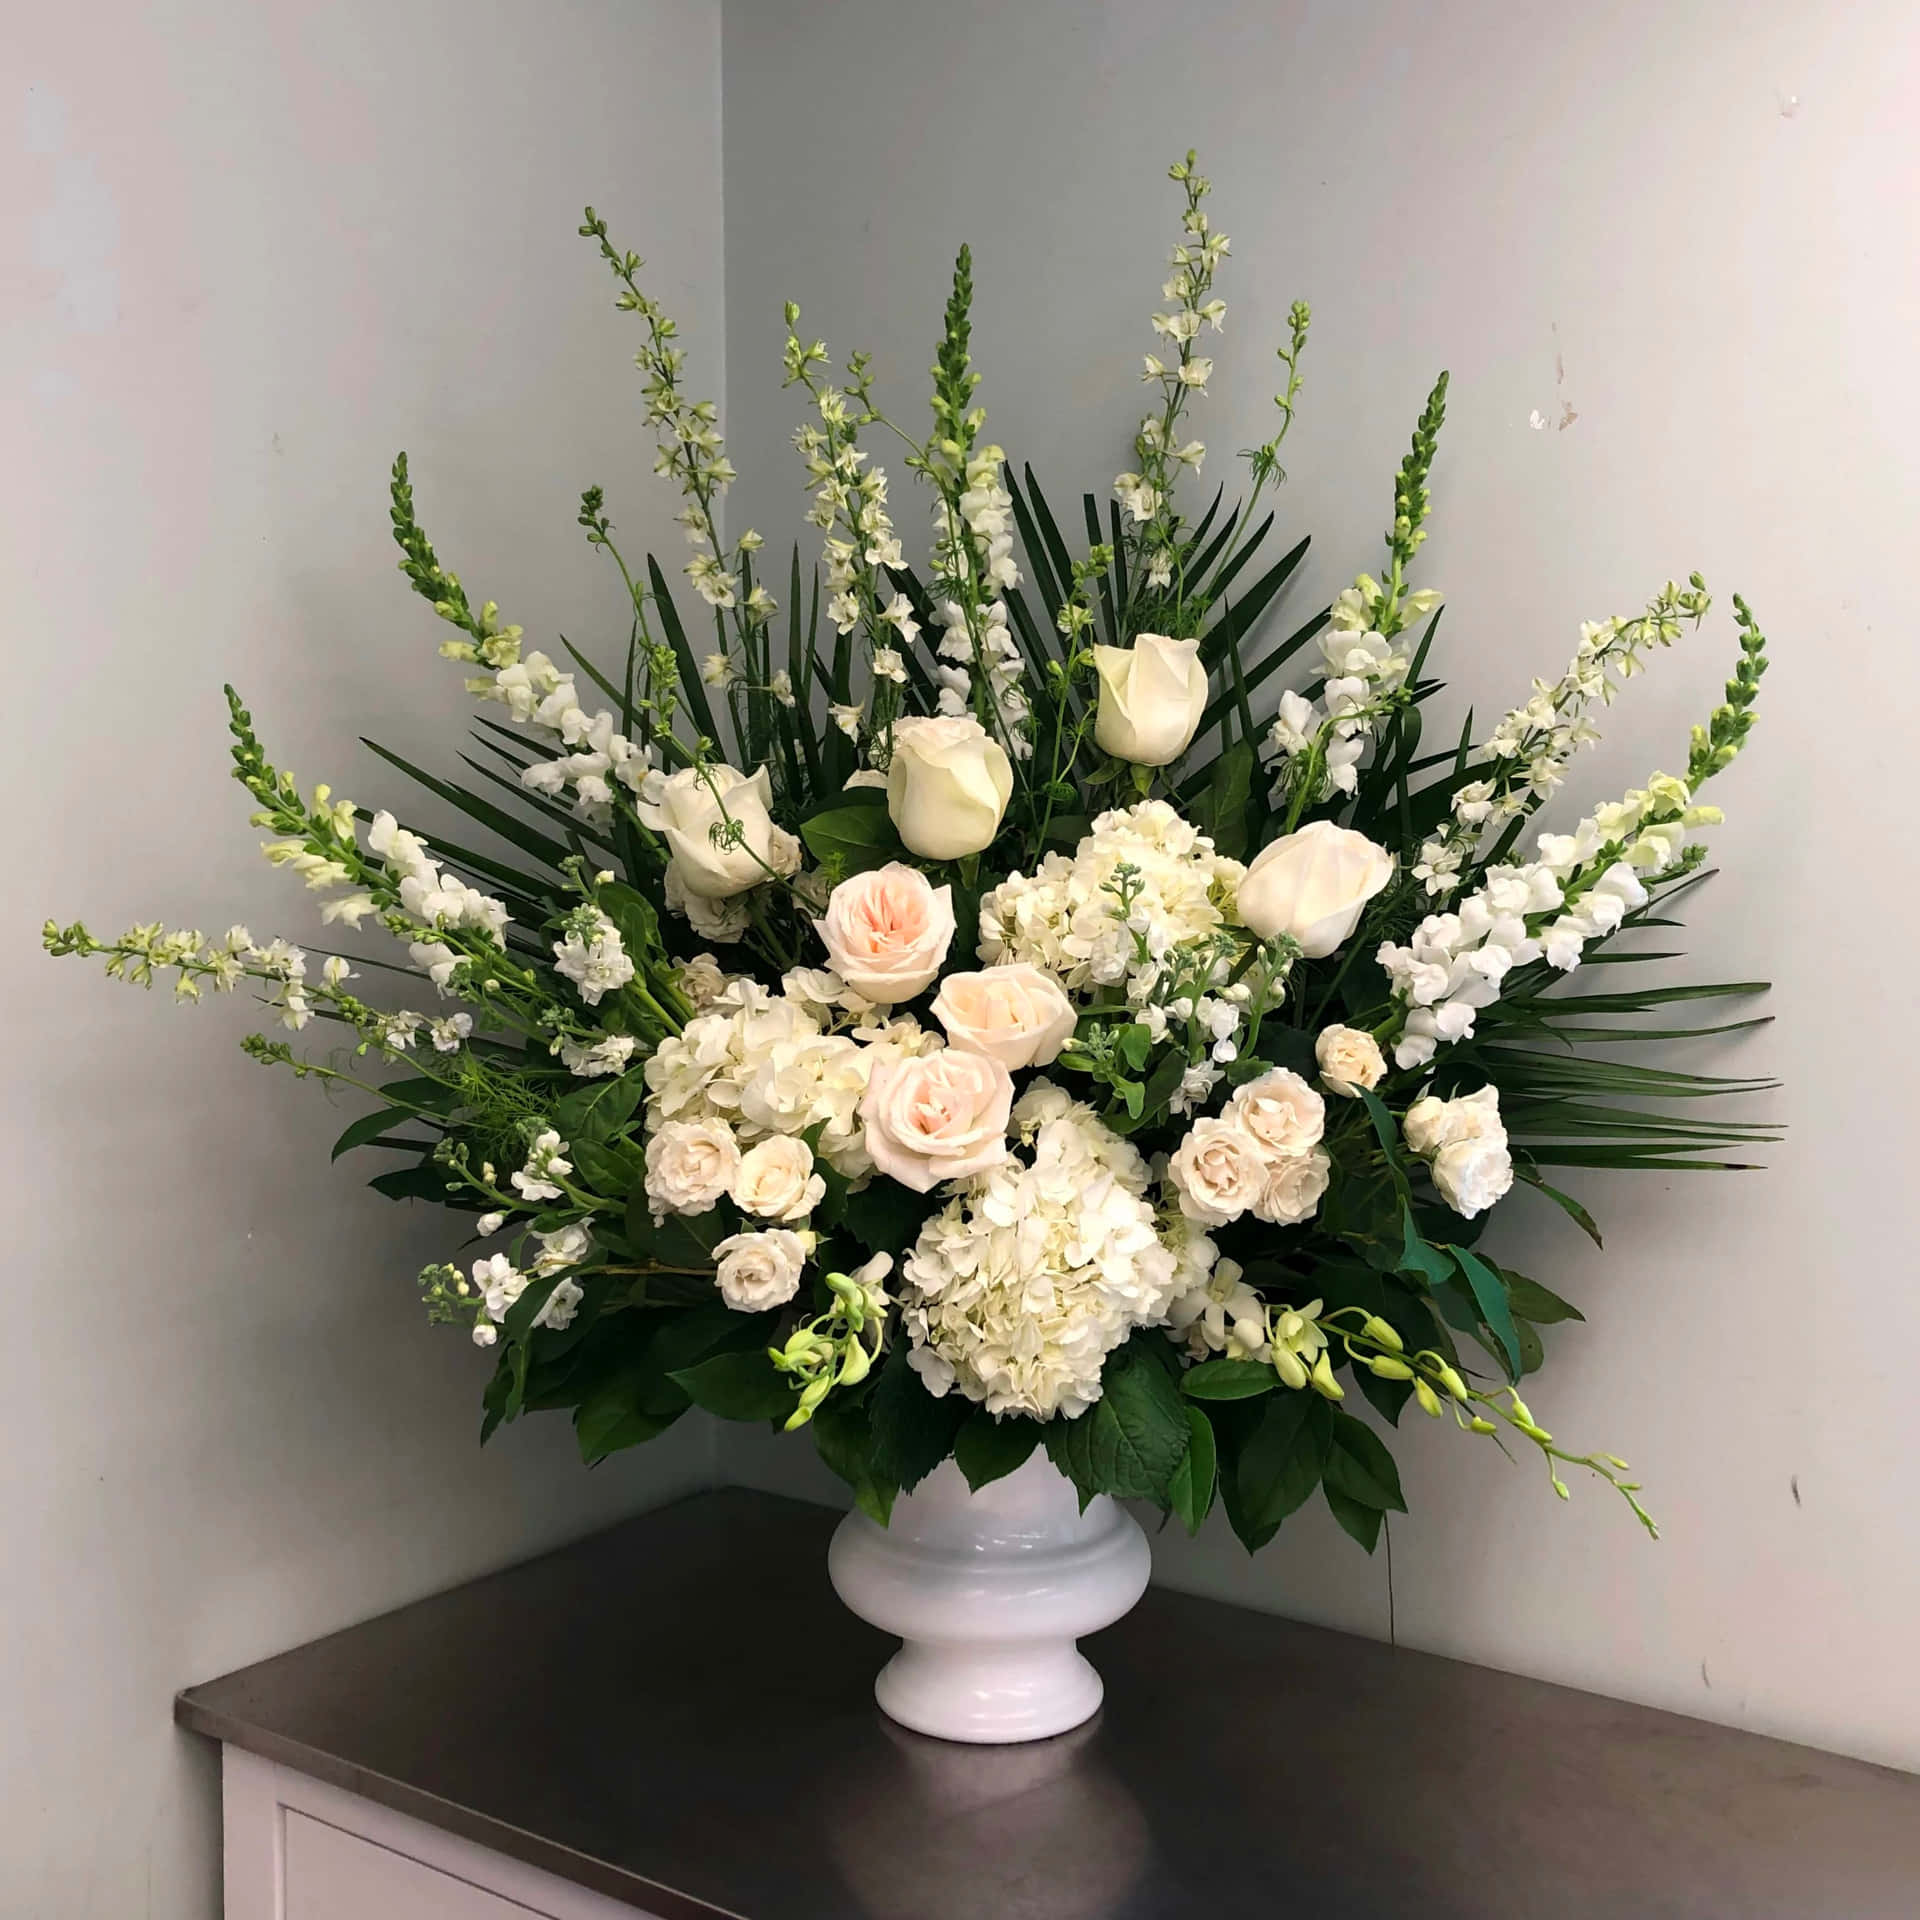 White Funeral Arrangement In A Vase